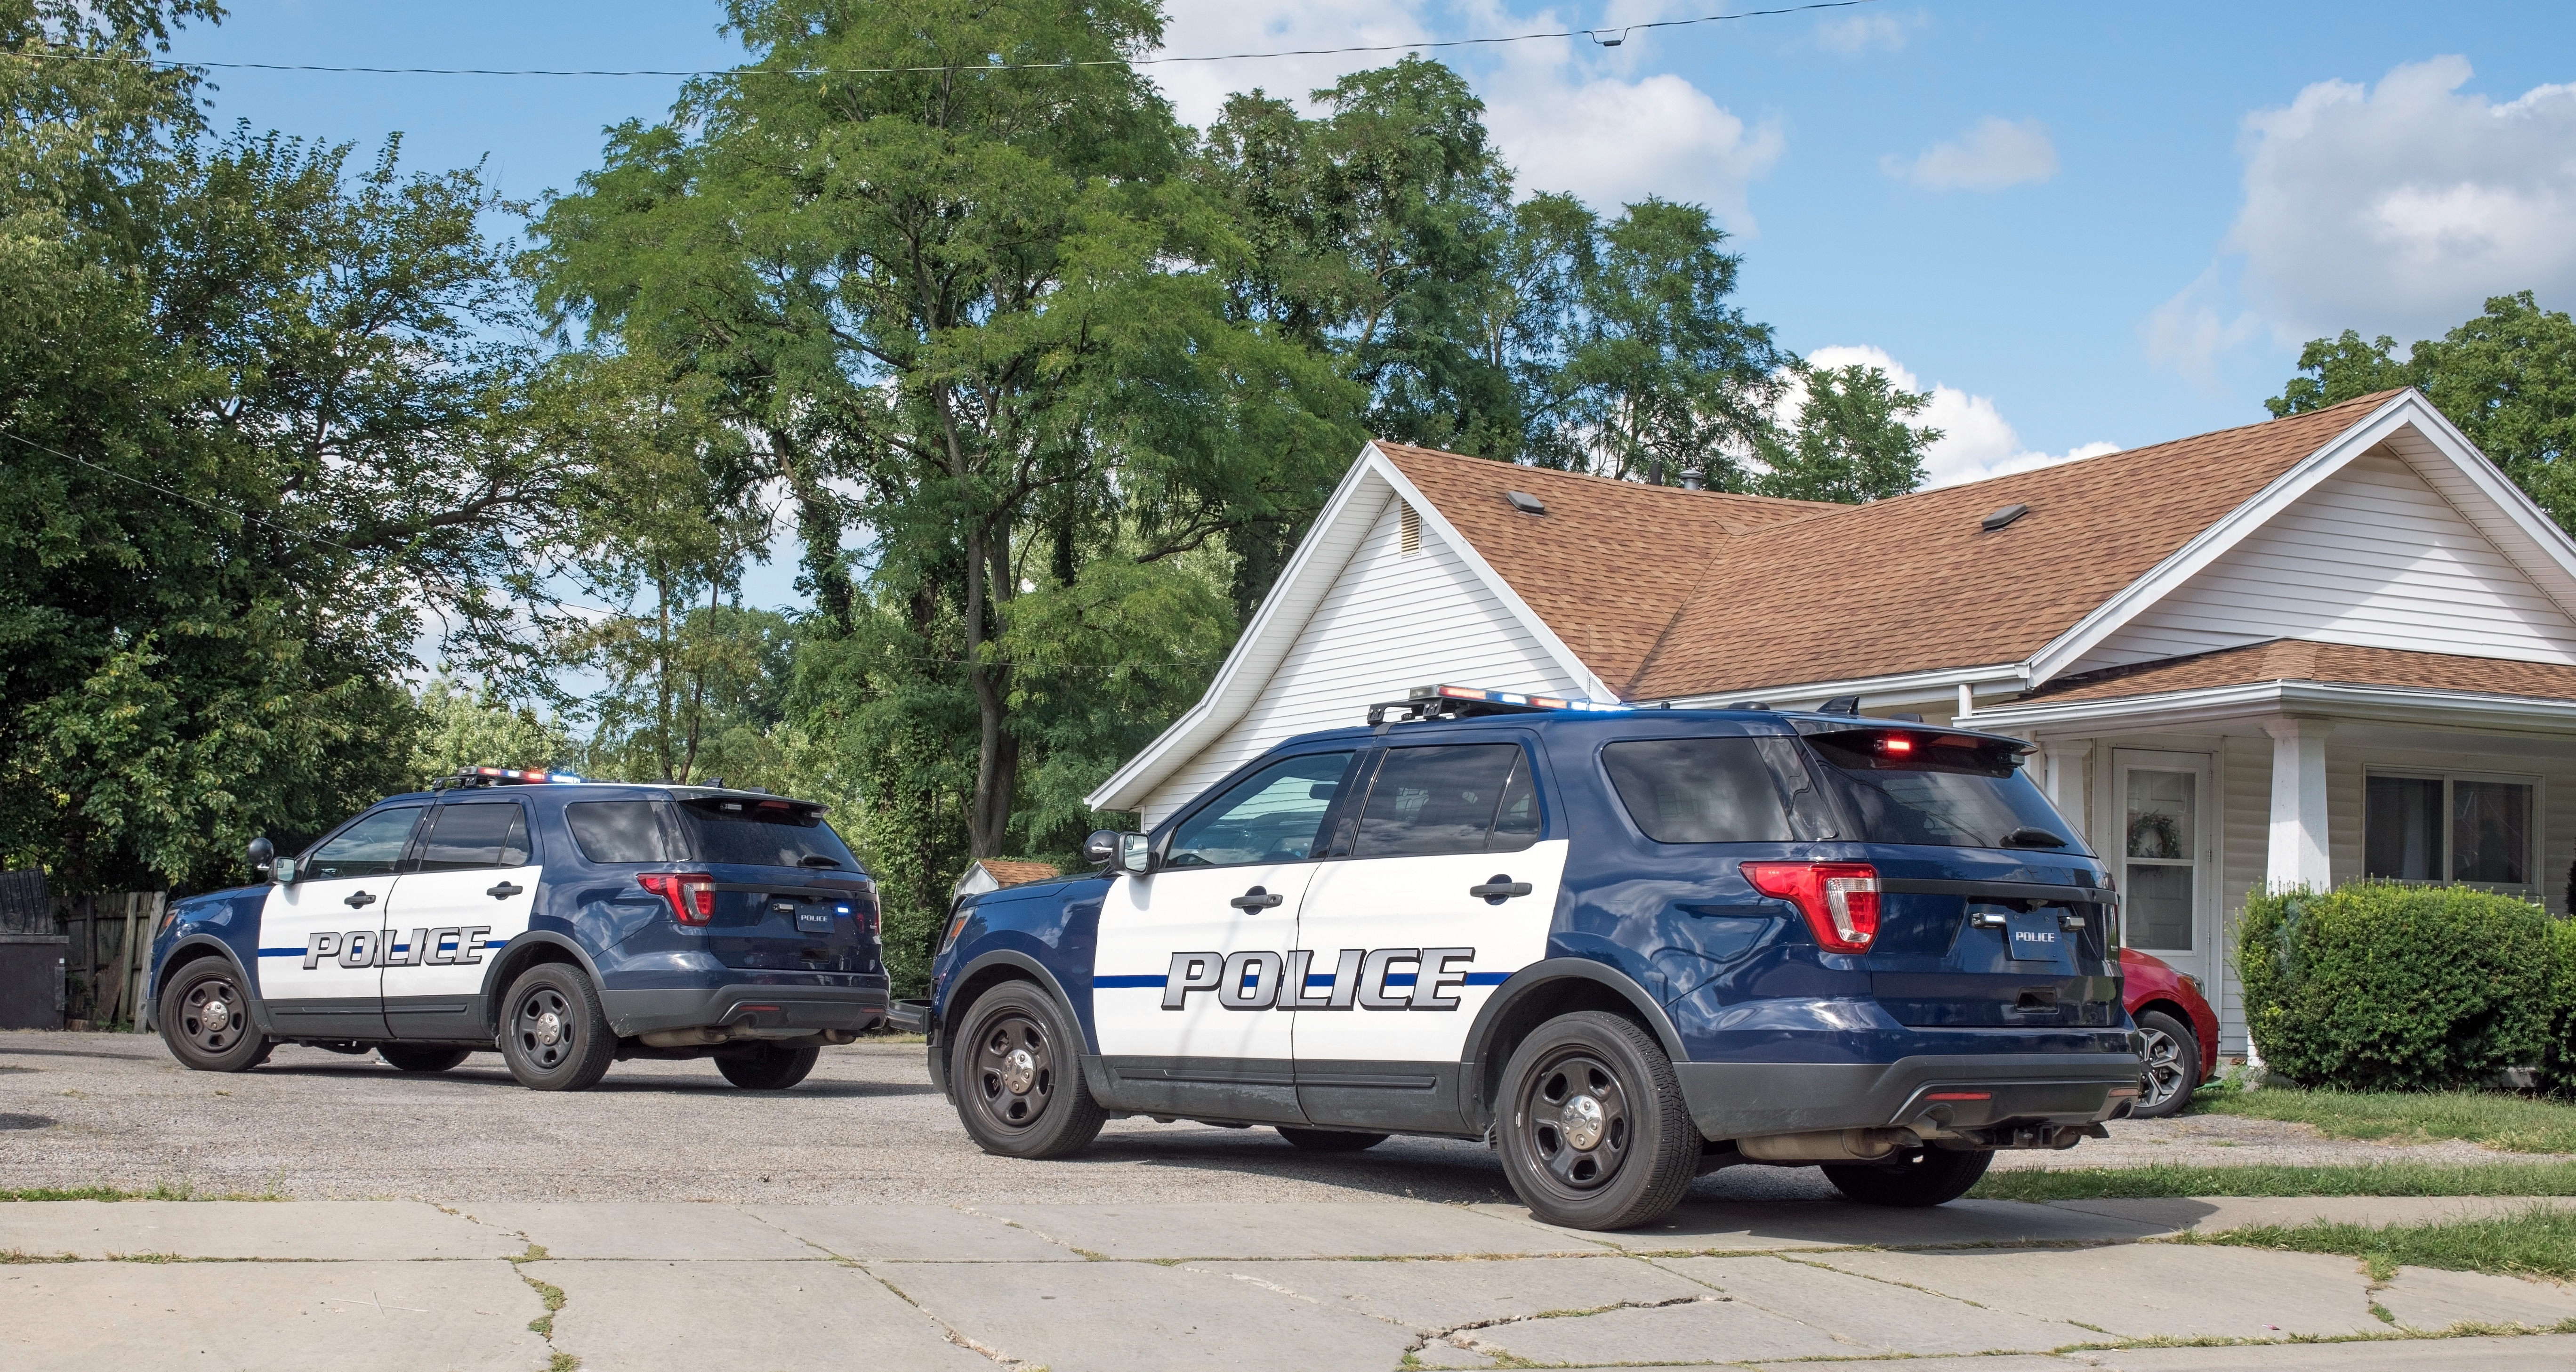 Police cars responding to 911 call | Source: Shutterstock.com